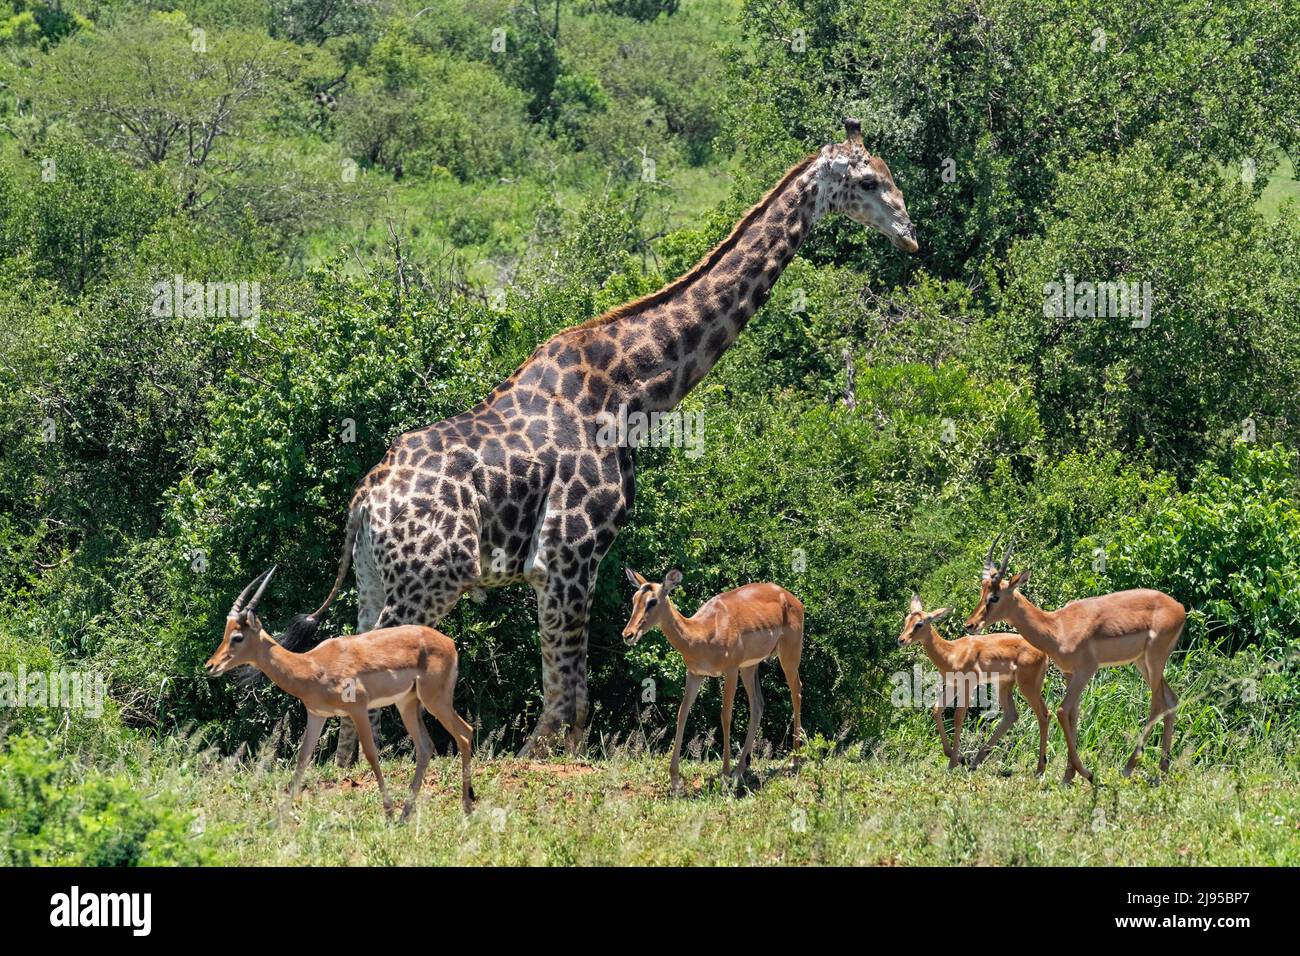 Jirafa sudafricana (Giraffa camelopardalis giraffa) e impalas (Aepyceros melampus), Parque Hluhluwe-Imfolozi, KwaZulu-Natal, Sudáfrica Foto de stock